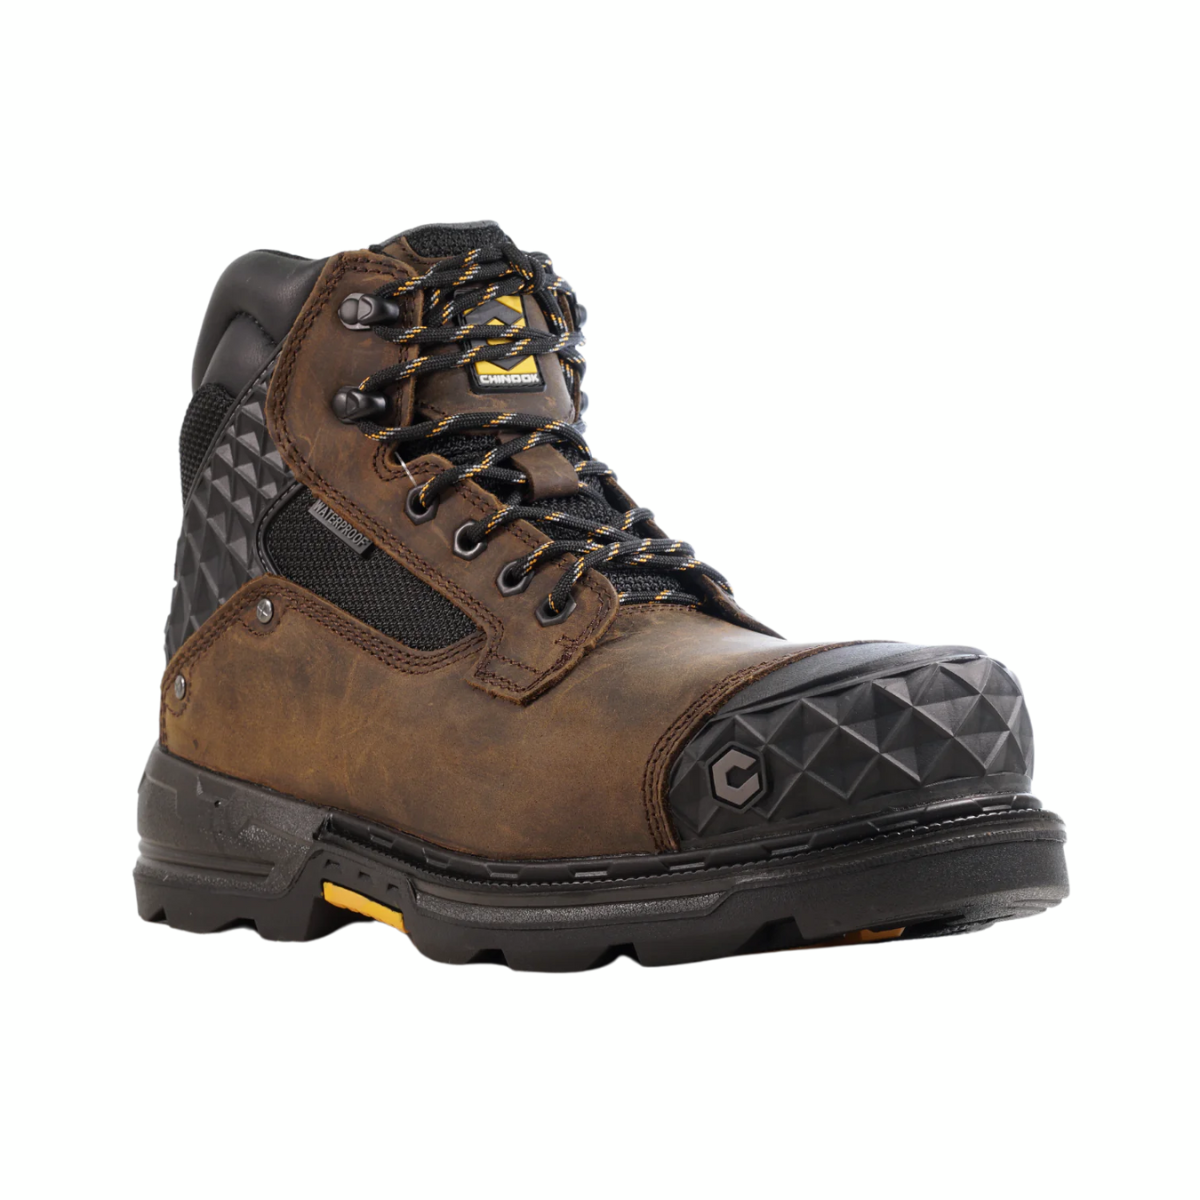 Pallet Jack 6" Comp Toe Men’s Waterproof Work Boot – Brown